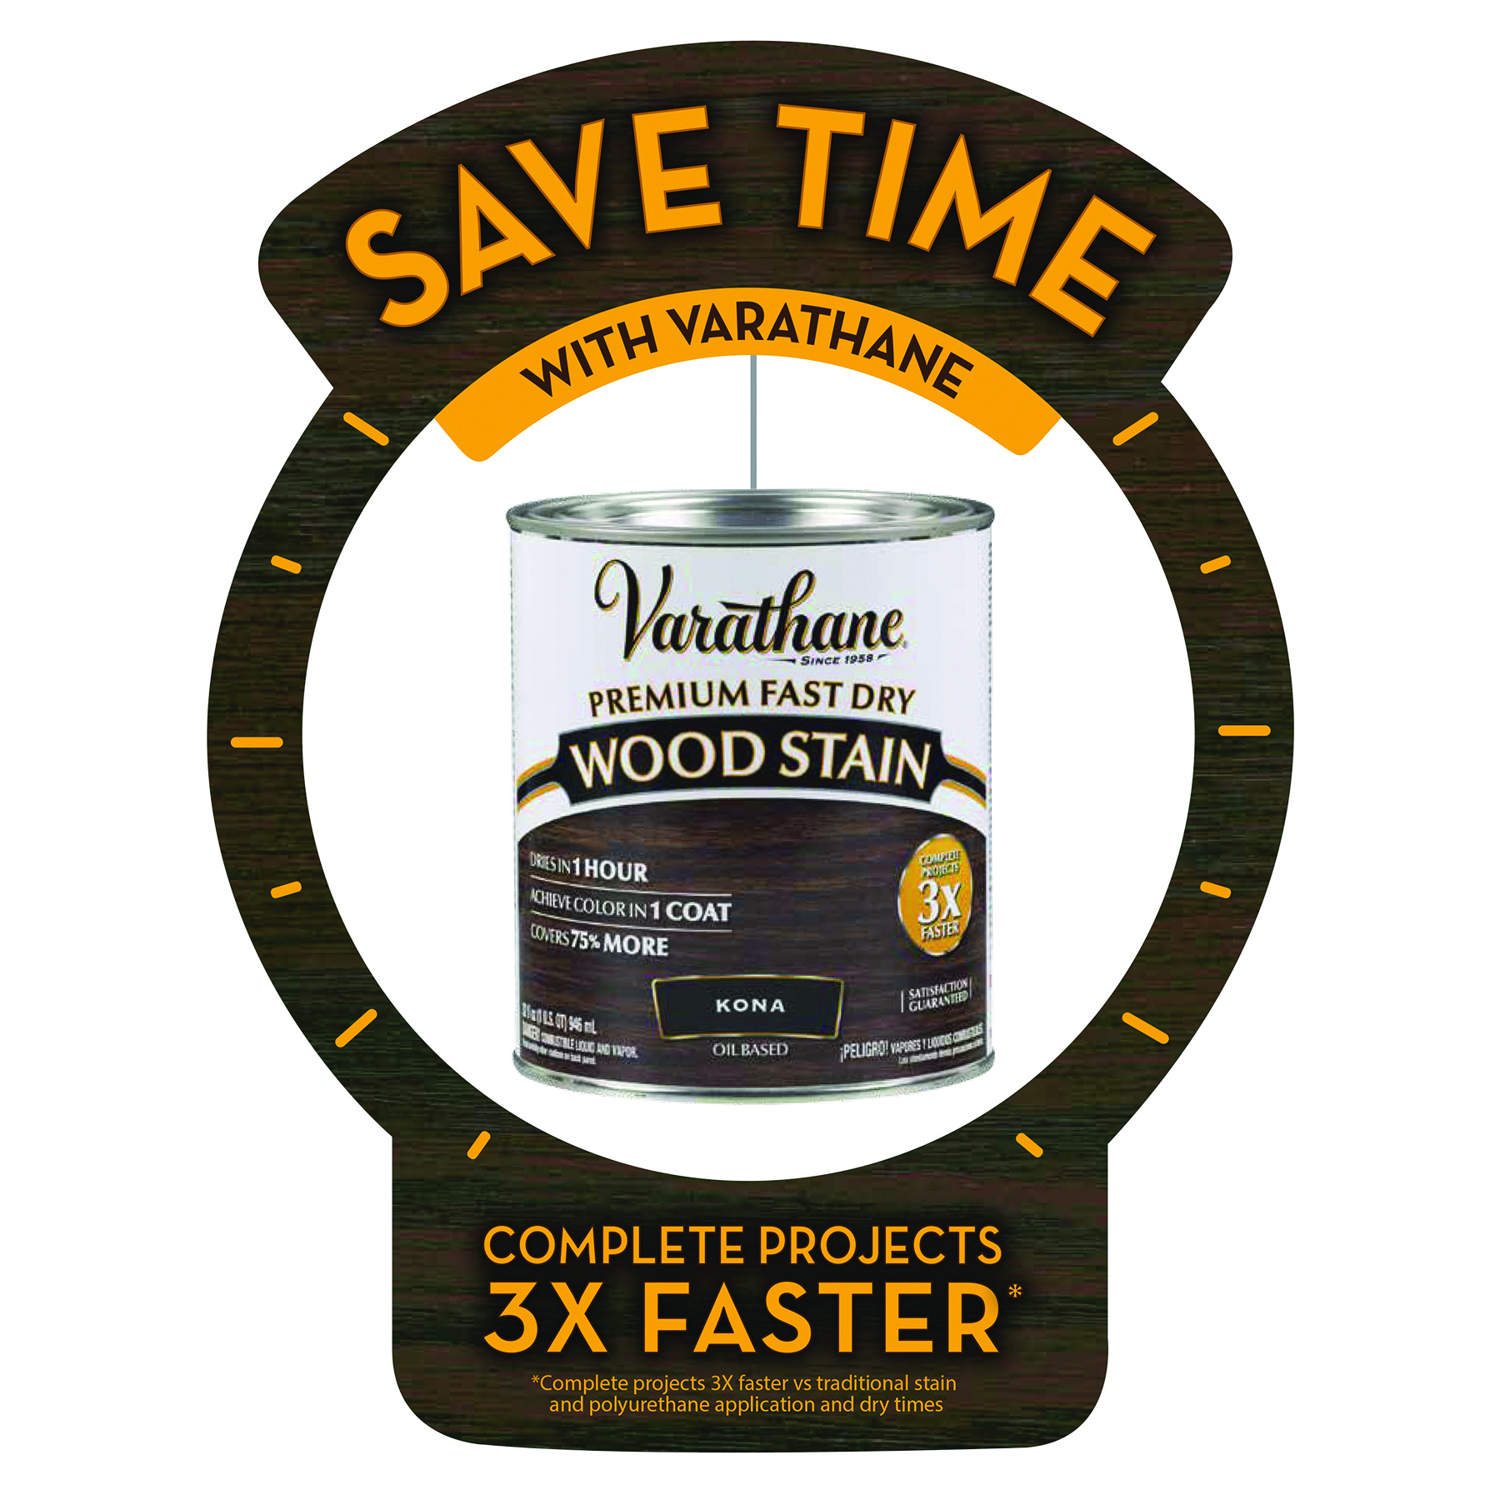 Varathane Premium Golden Mahogany Oil-Based Fast Dry Wood Stain 0.5 pt